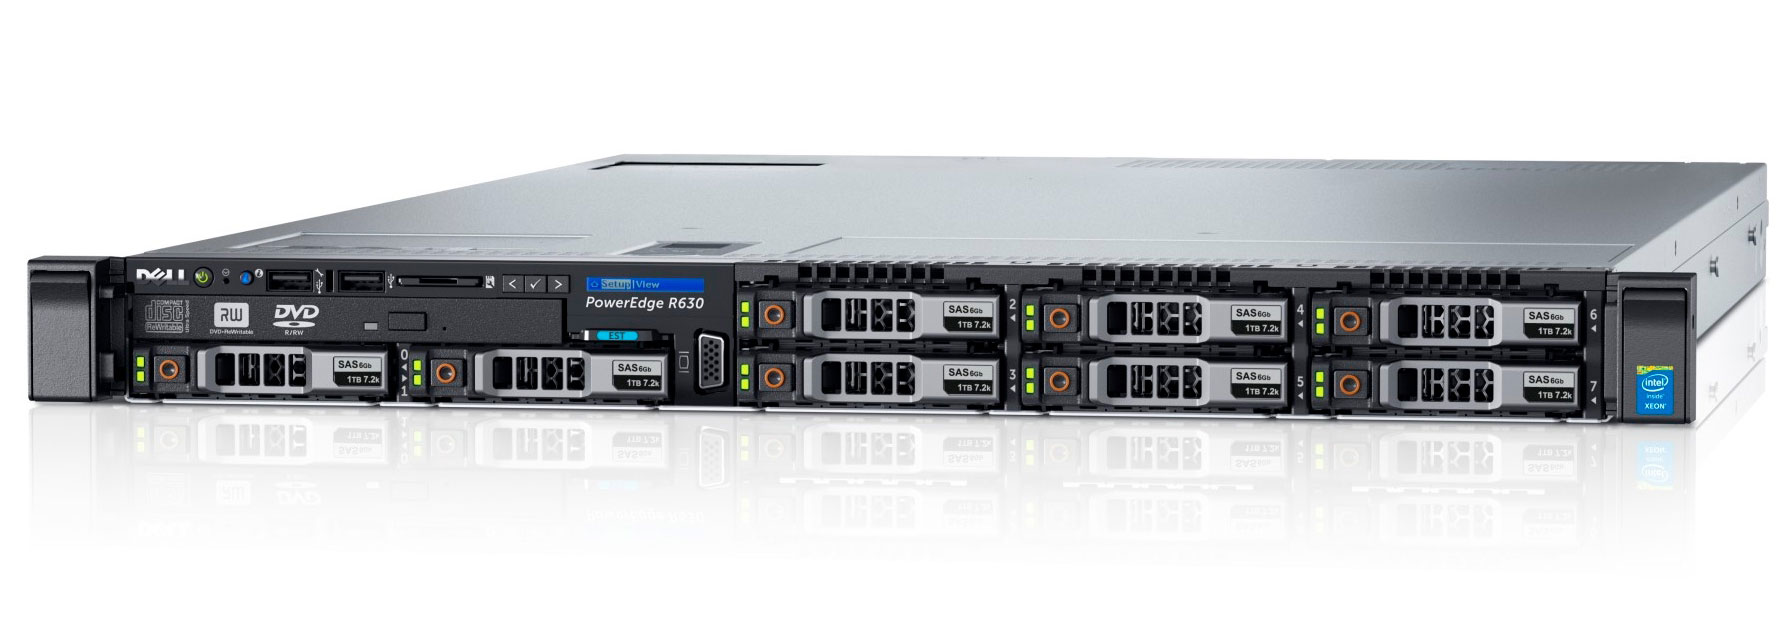 Подробное фото Сервер DELL PowerEdge R630 Xeon 2x E5-2667v3 128Gb 2133P DDR4 8x noHDD 2.5", SAS RAID Perc H730, 1024Mb, DVD, 2*PSU